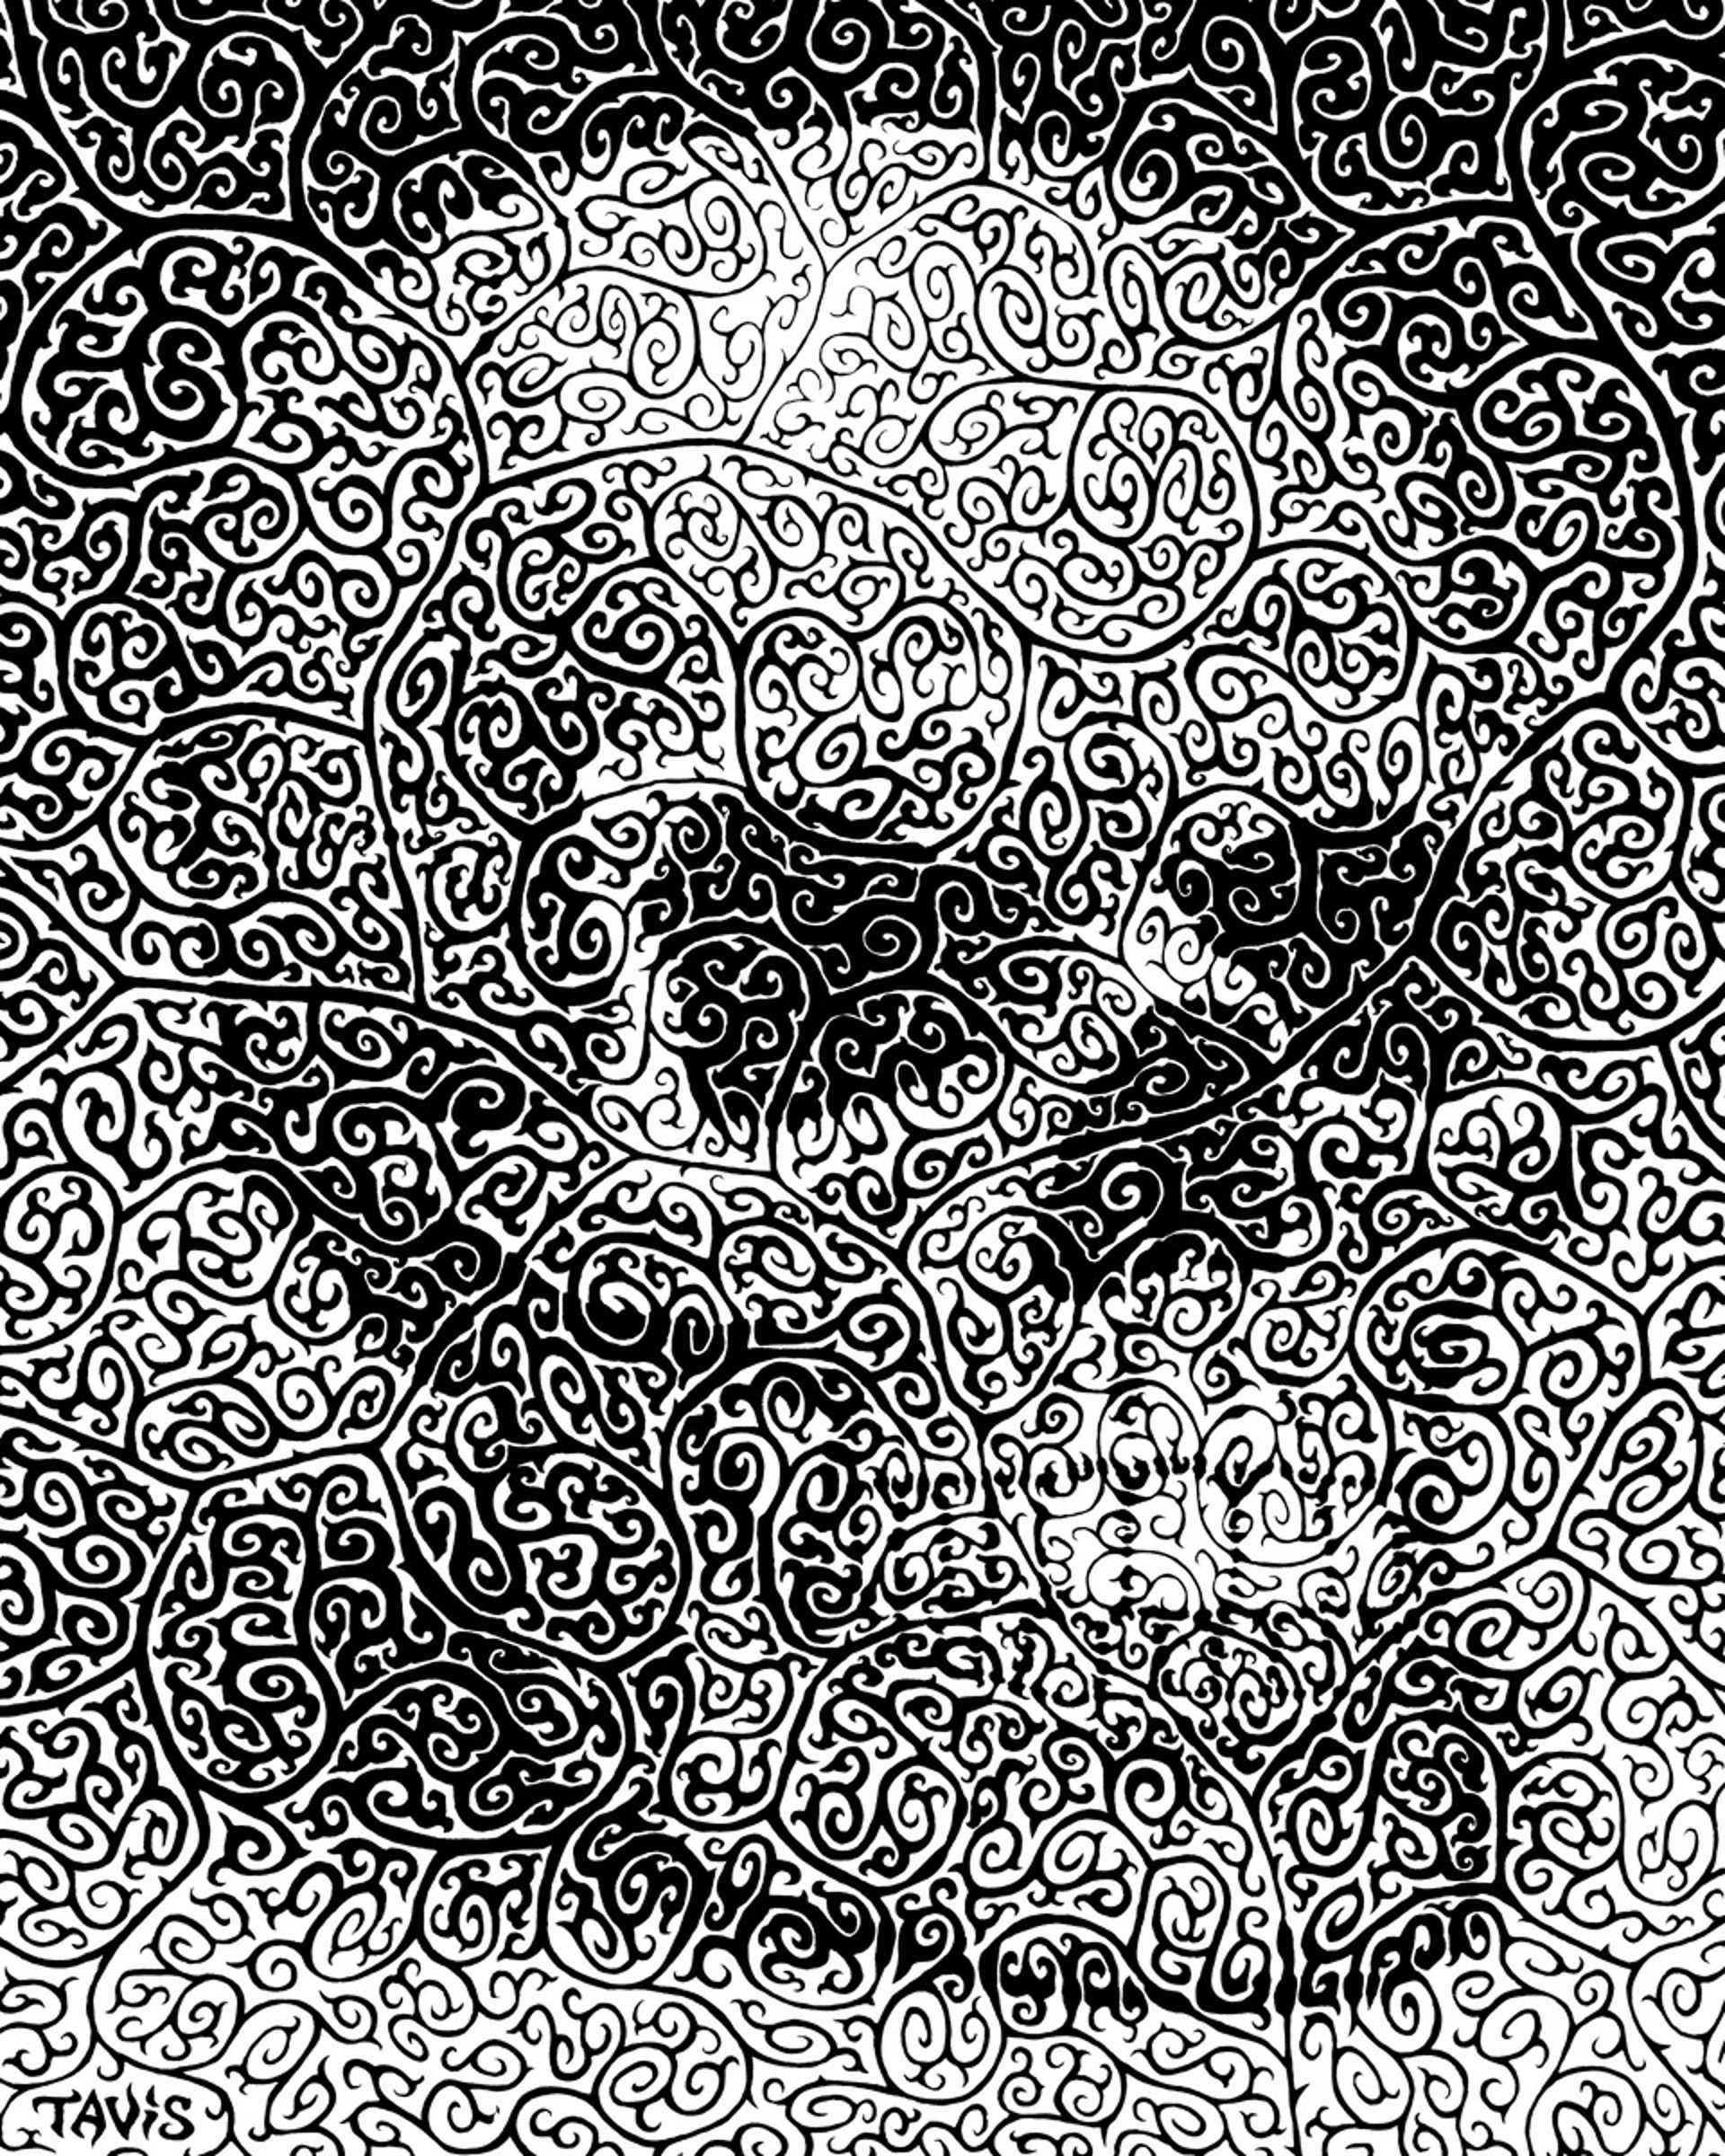 Skull Study II by Bill Tavis